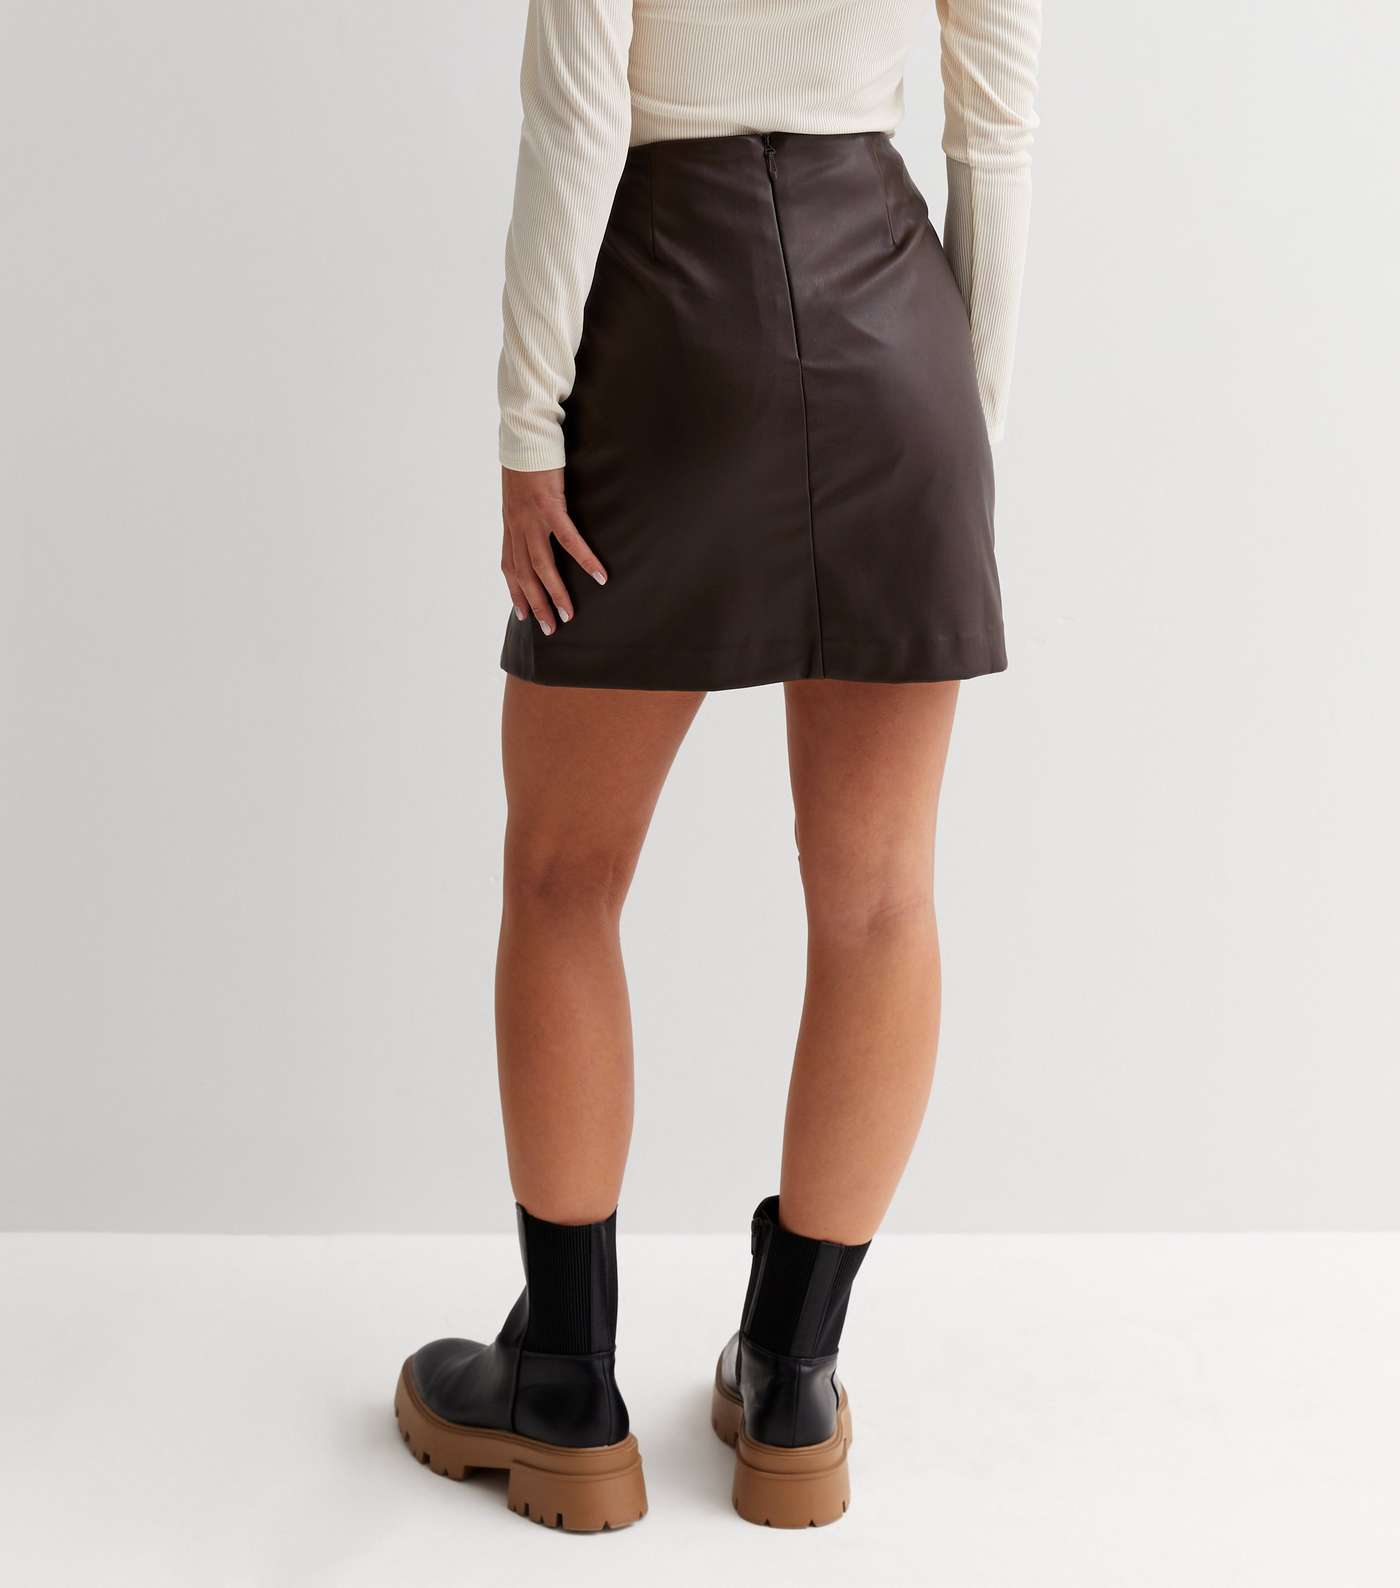 Petite Brown Leather-Look High Waist Skirt Image 4